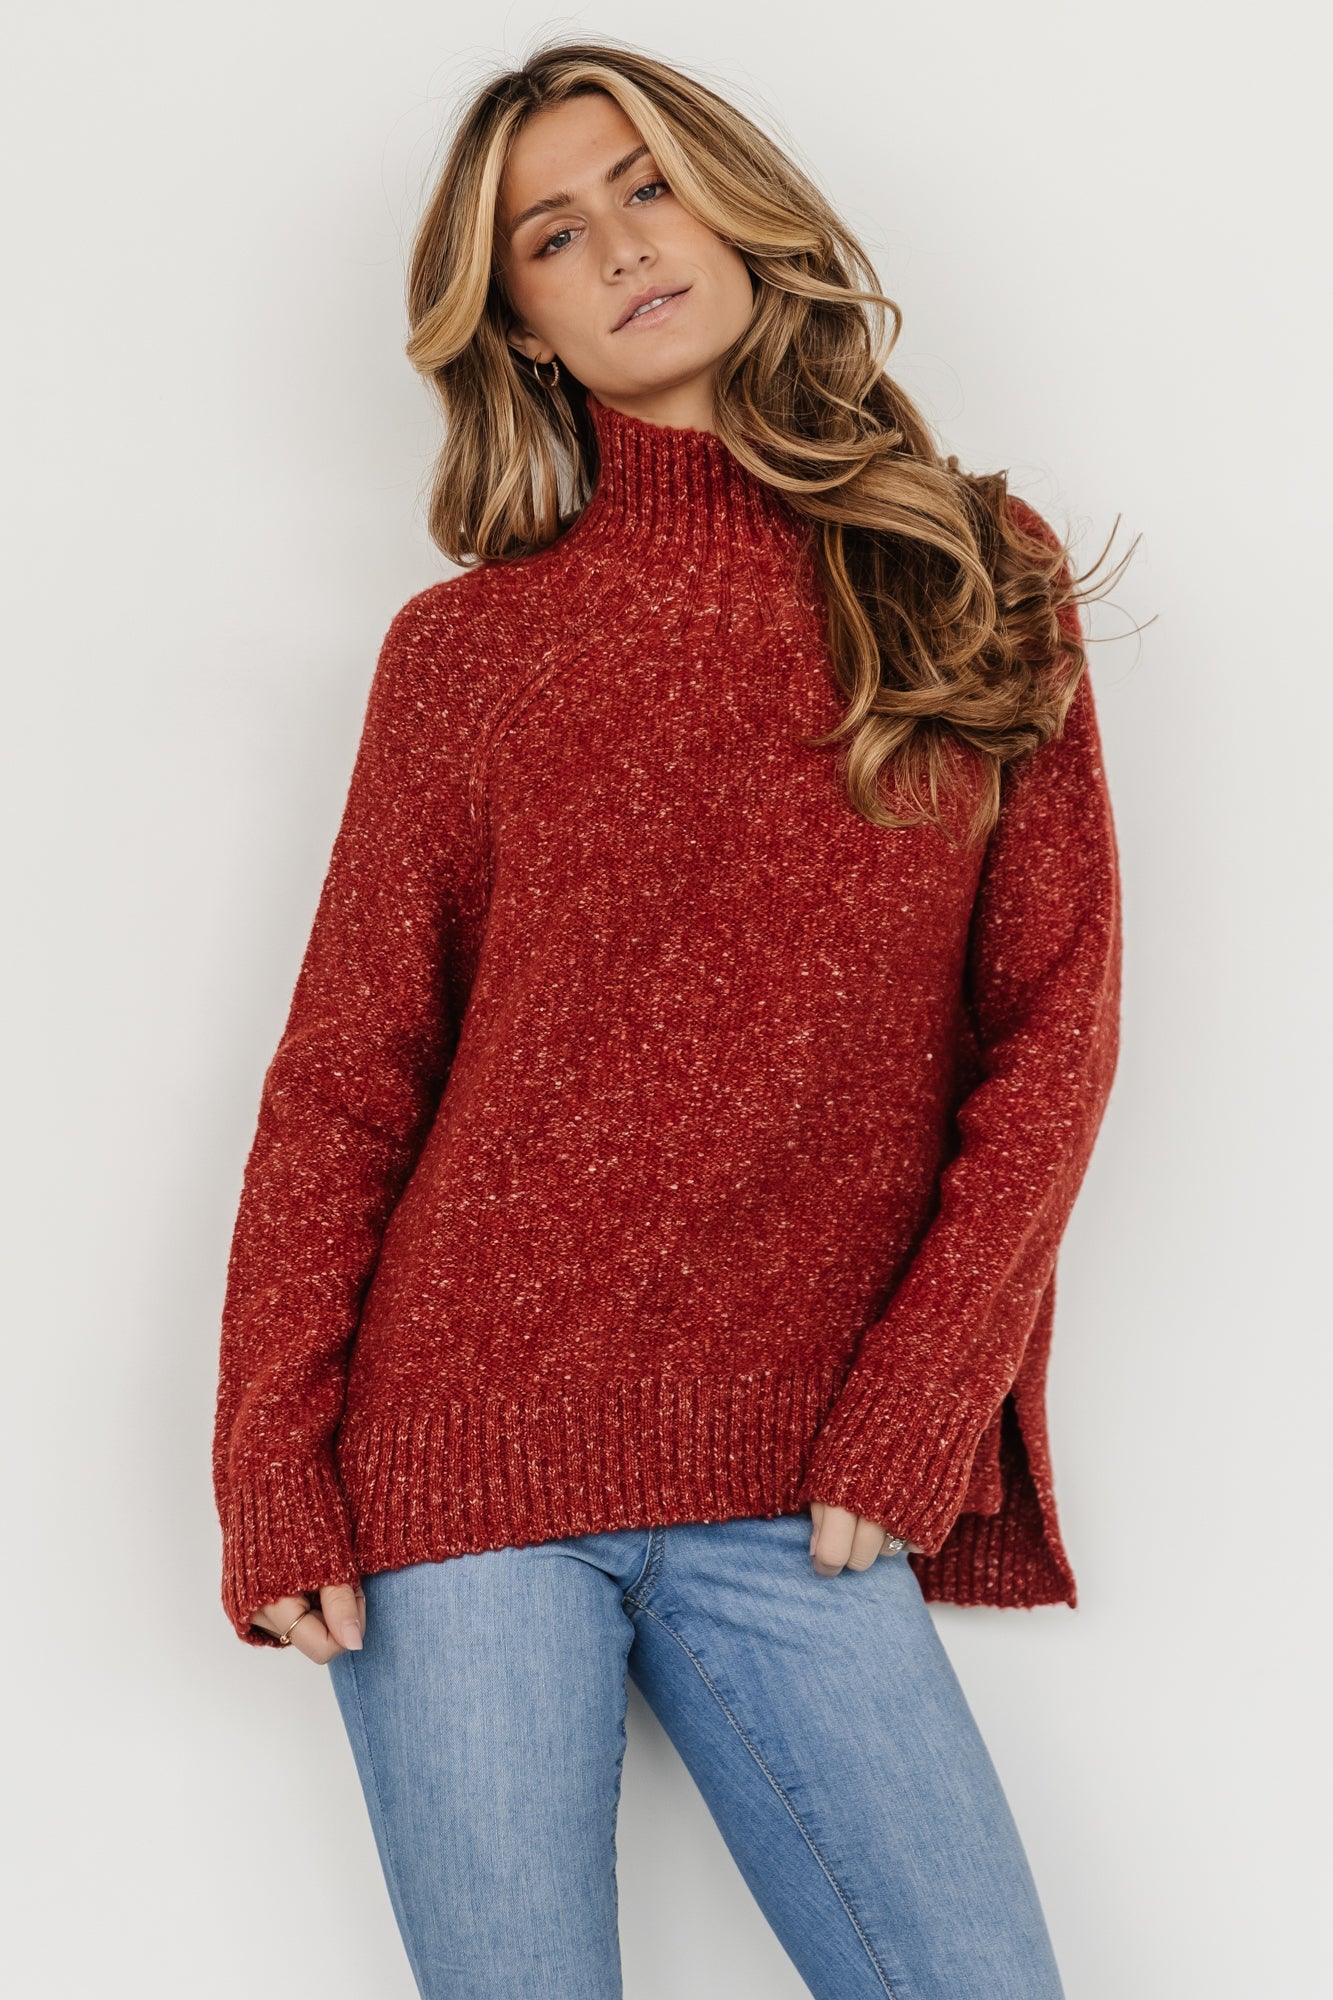 Turtleneck Sweater Weather: Maroon Bells, Colorado — Miss Minus Sized